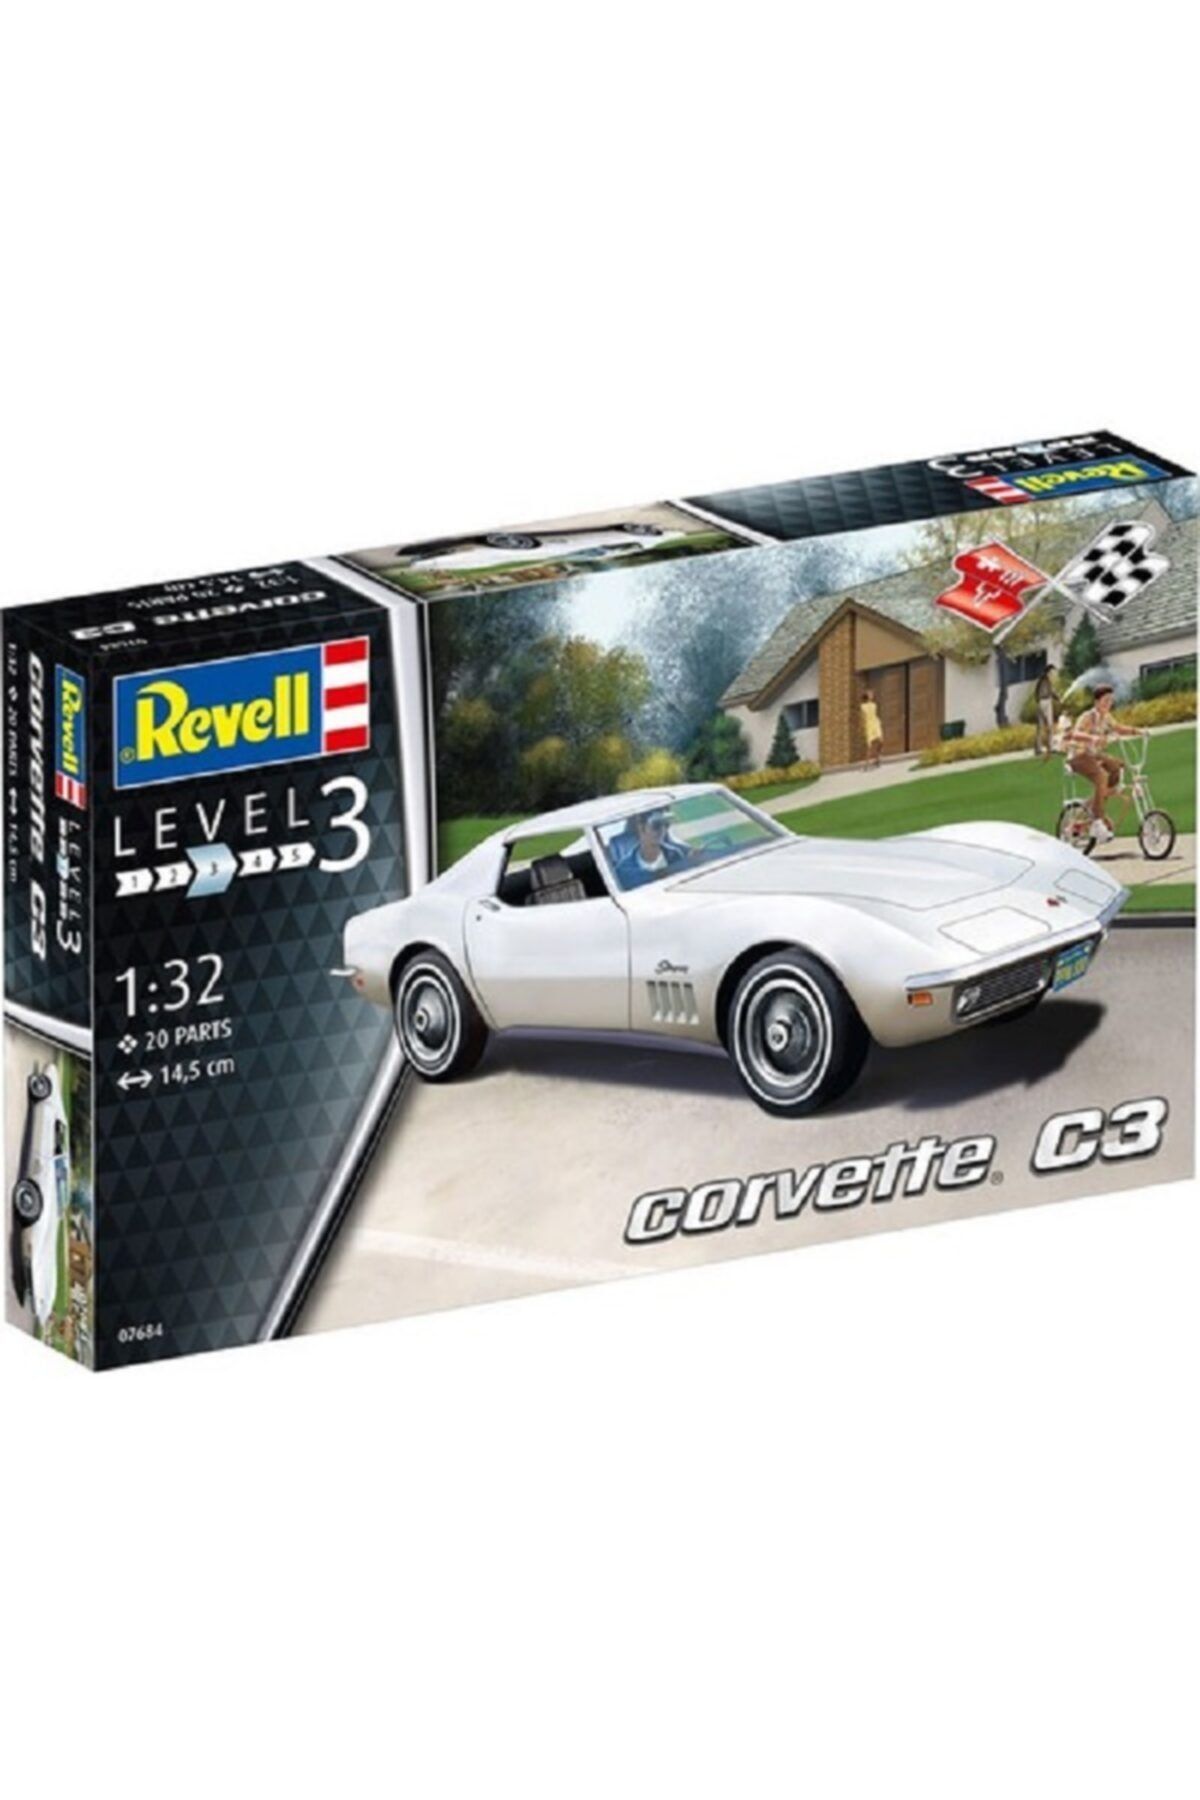 REVELL Corvette C3 20 Parts 14,5 Cm